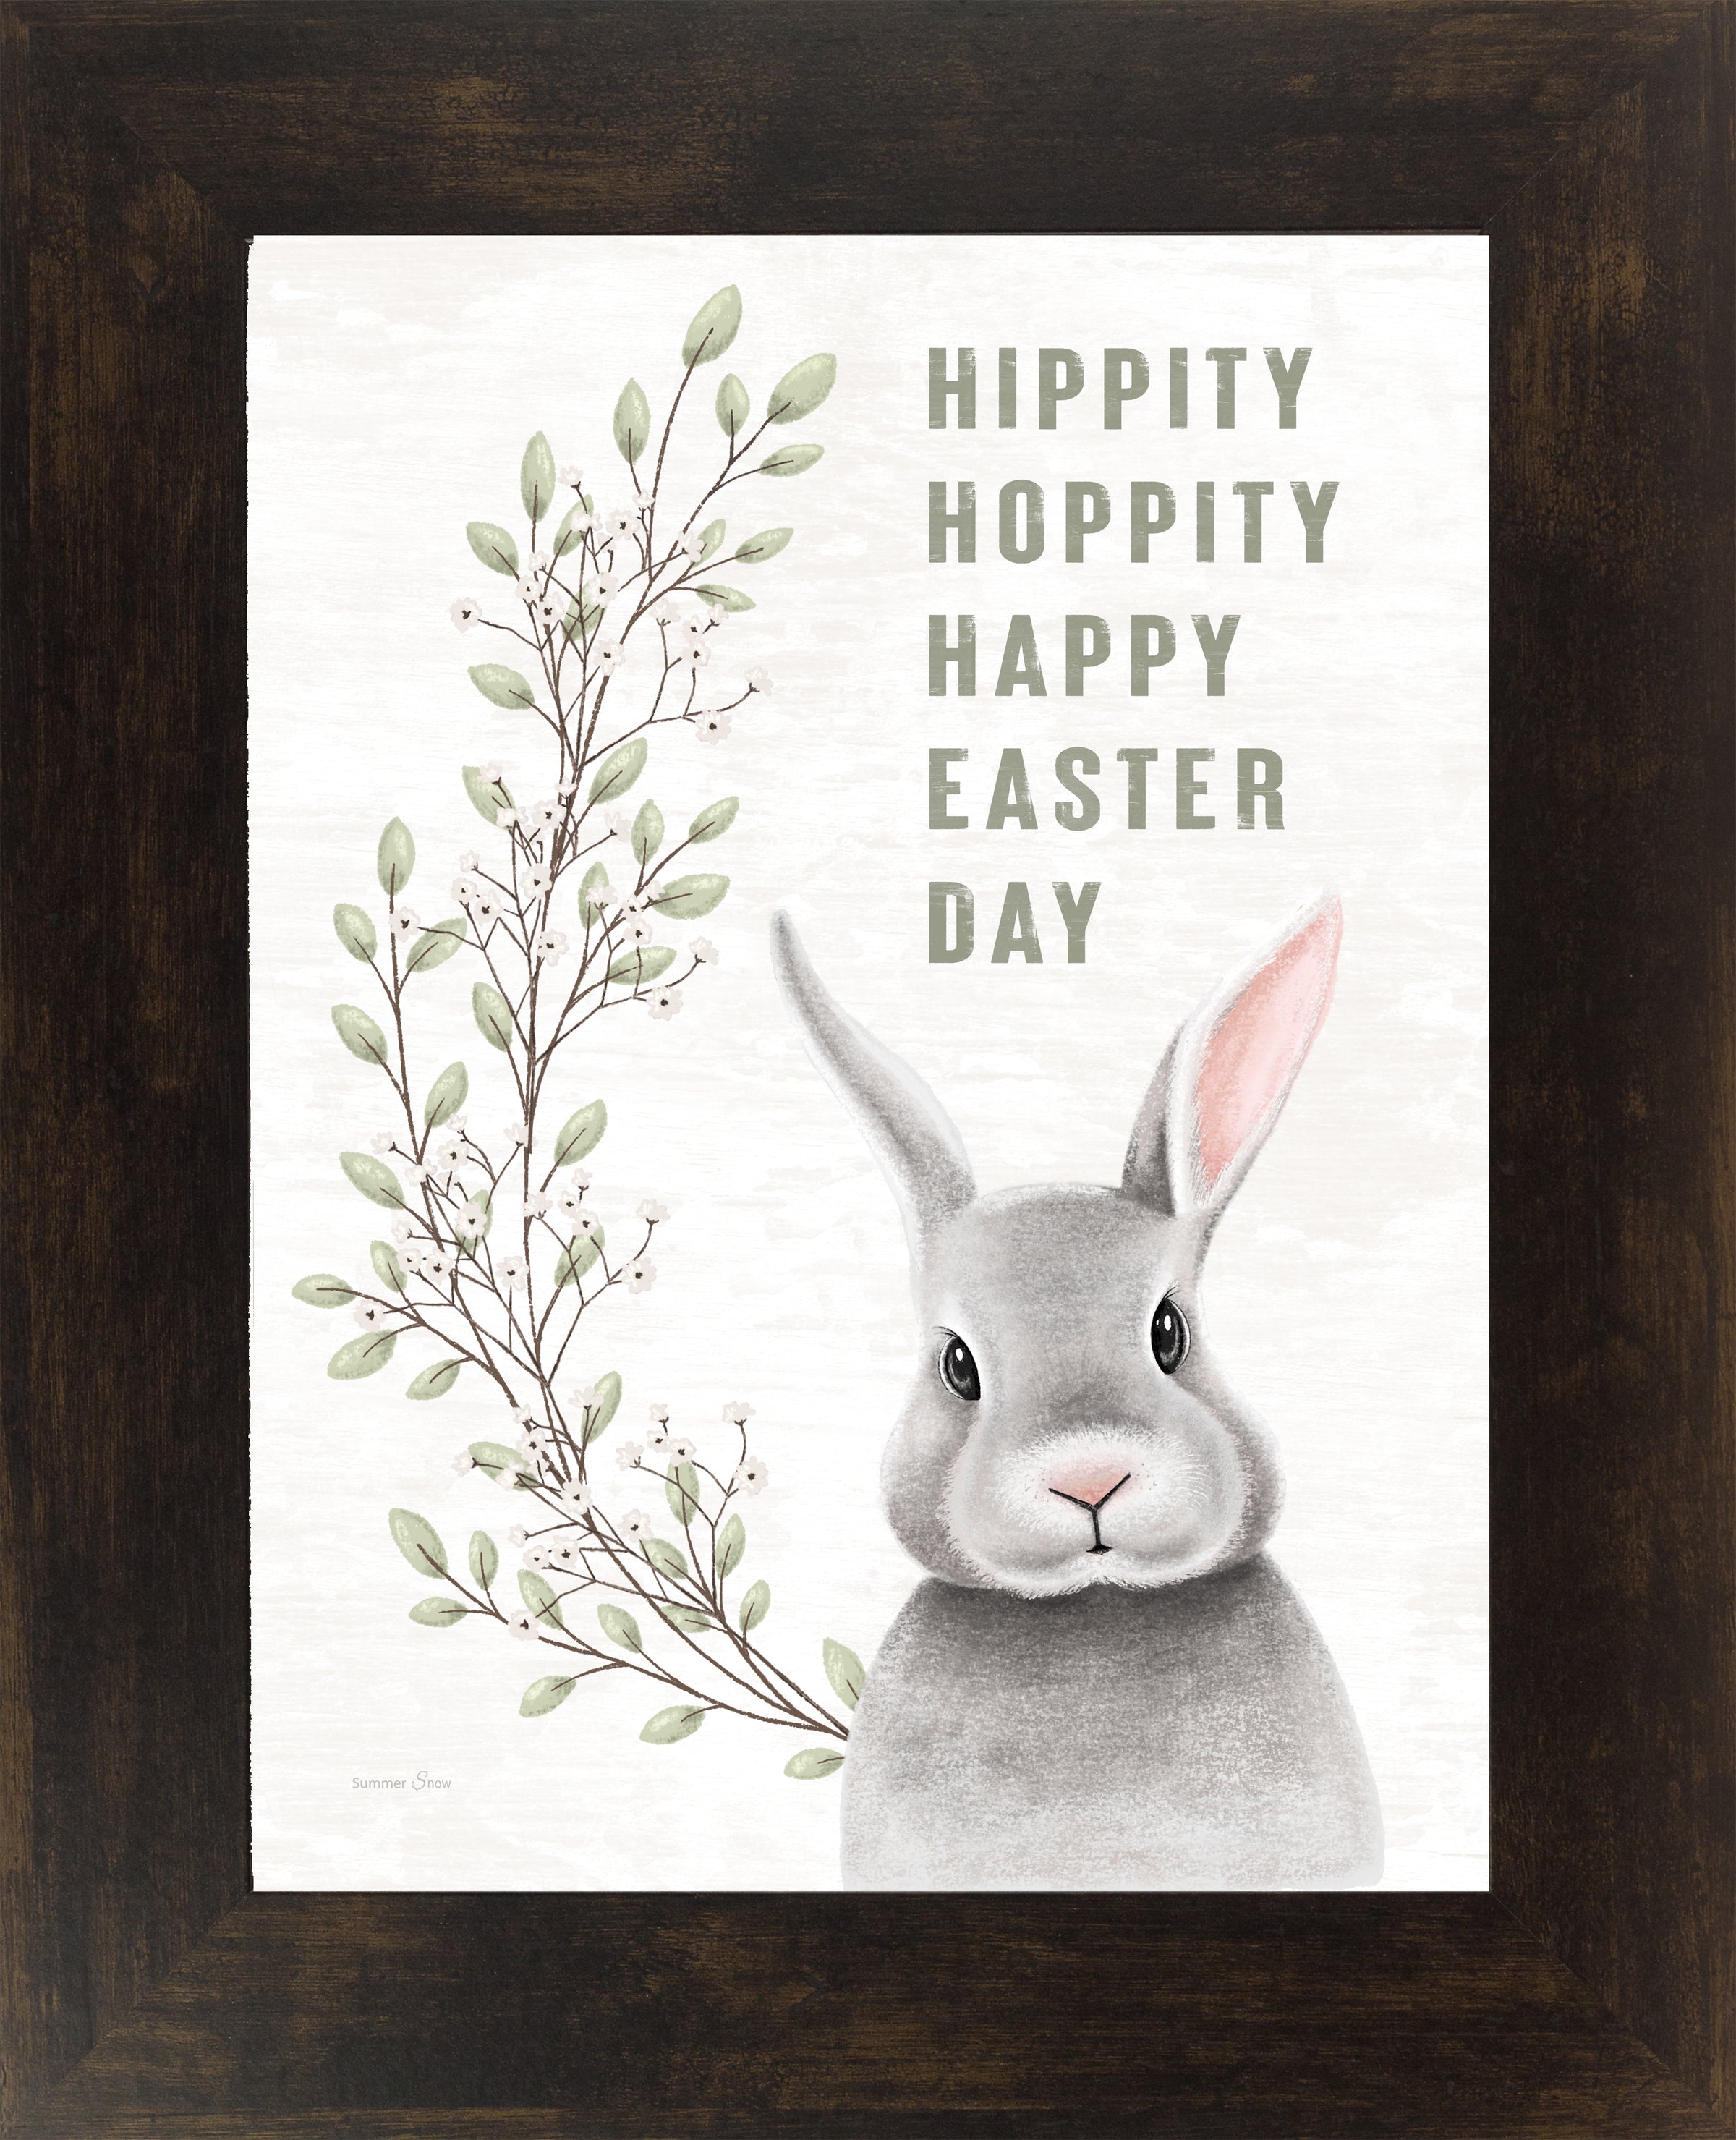 Hippity Hoppity Happy Easter Day by Summer Snow SA366